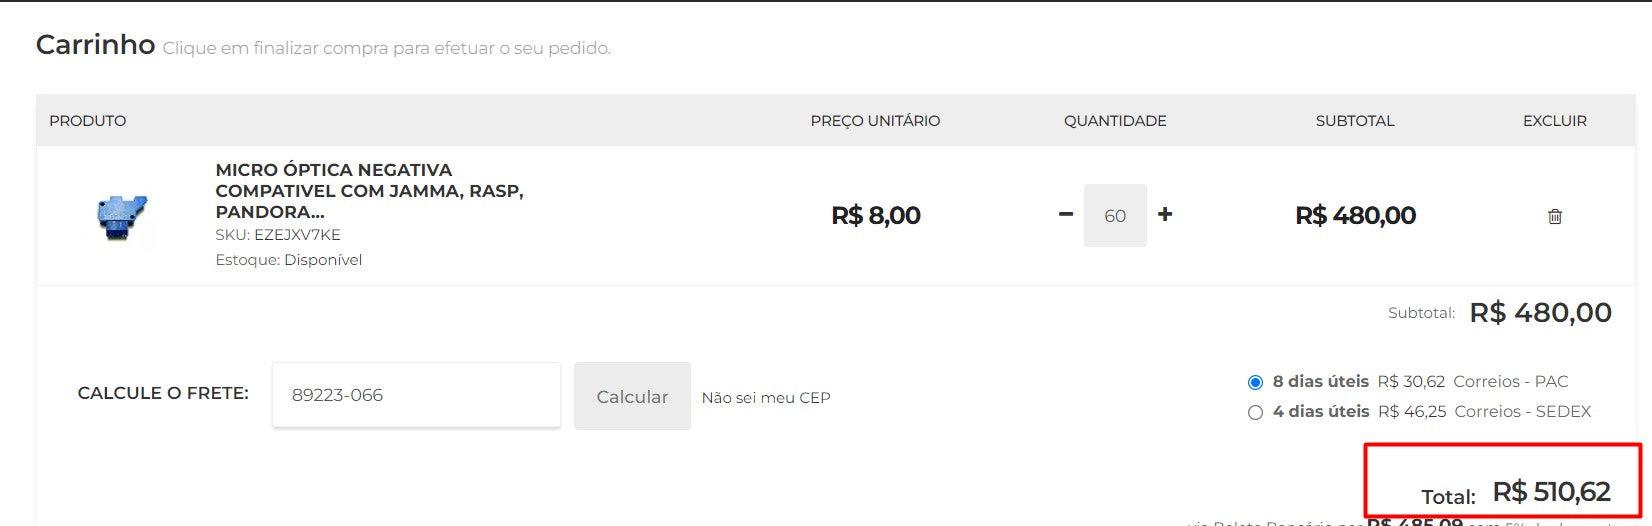 Personal Shopper | Buy from Brazil -MICRO ÓPTICA NEGATIVA COMPATIVEL COM JAMMA, RASP, PANDORA... - 60 items (DDP)